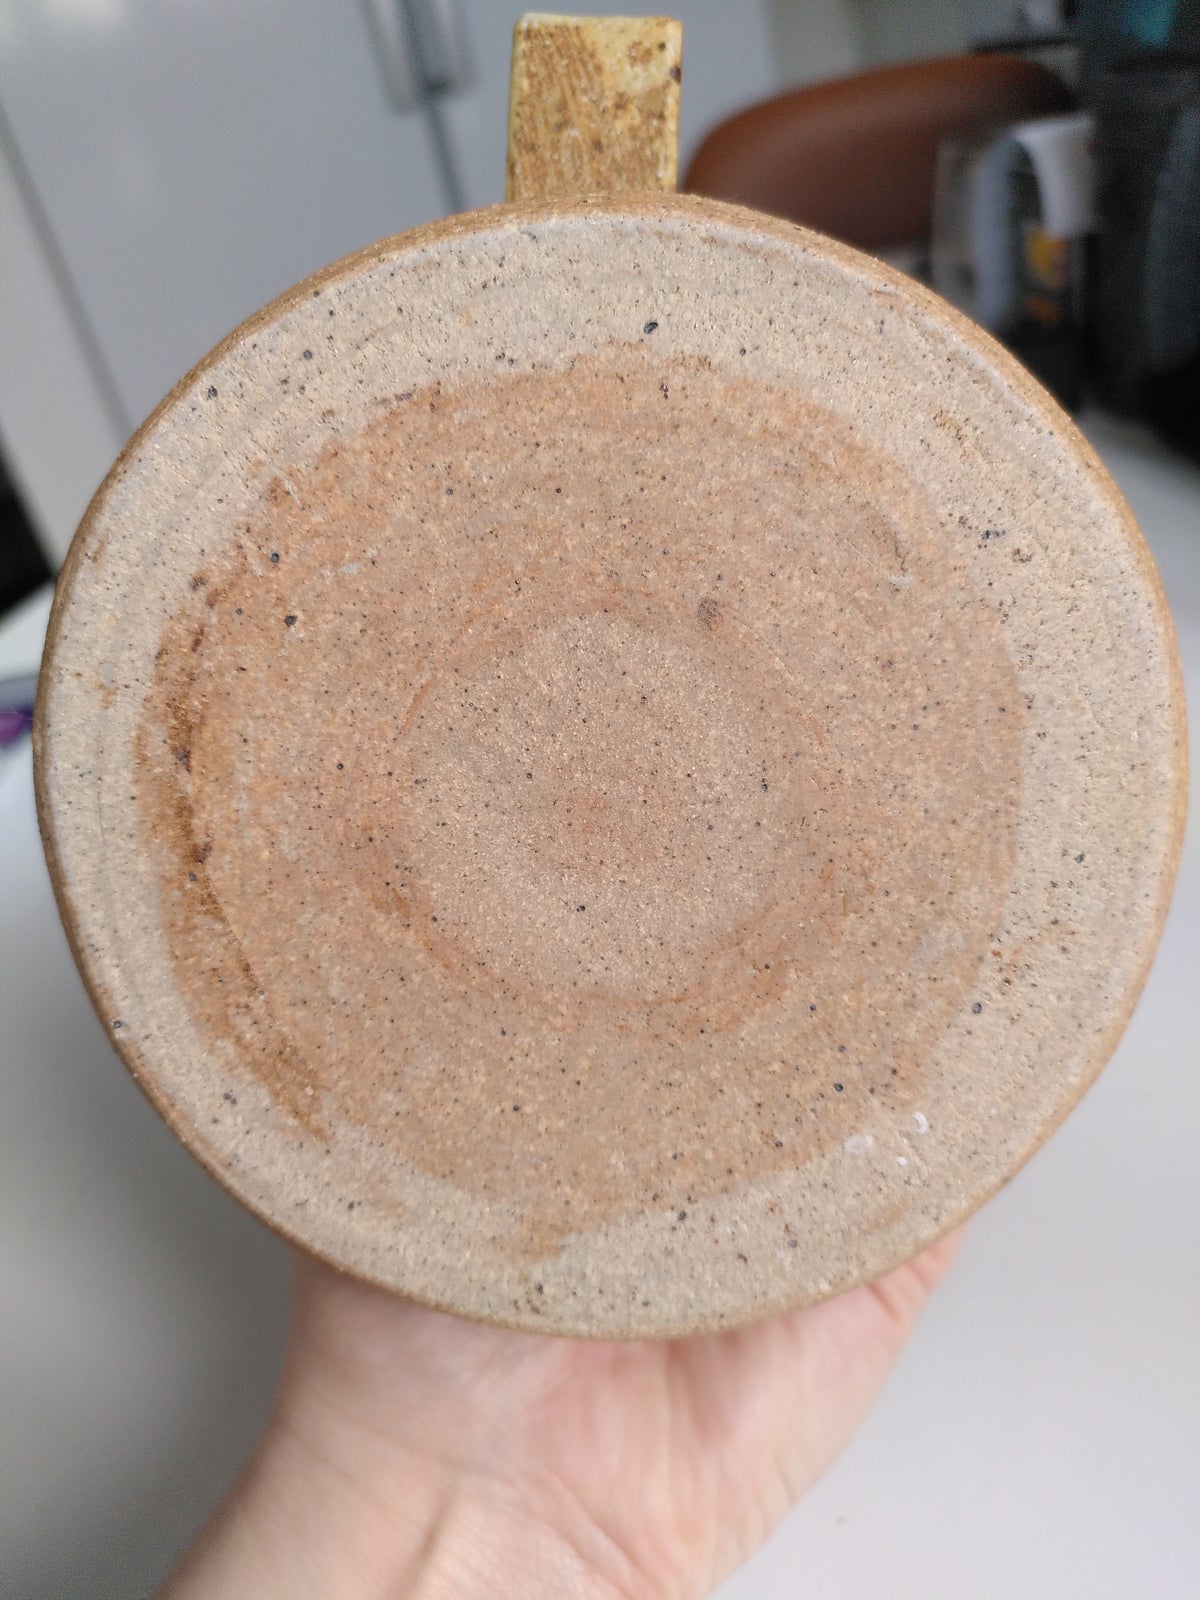 Stentøjskande / vase, Tue Poulsen keramik